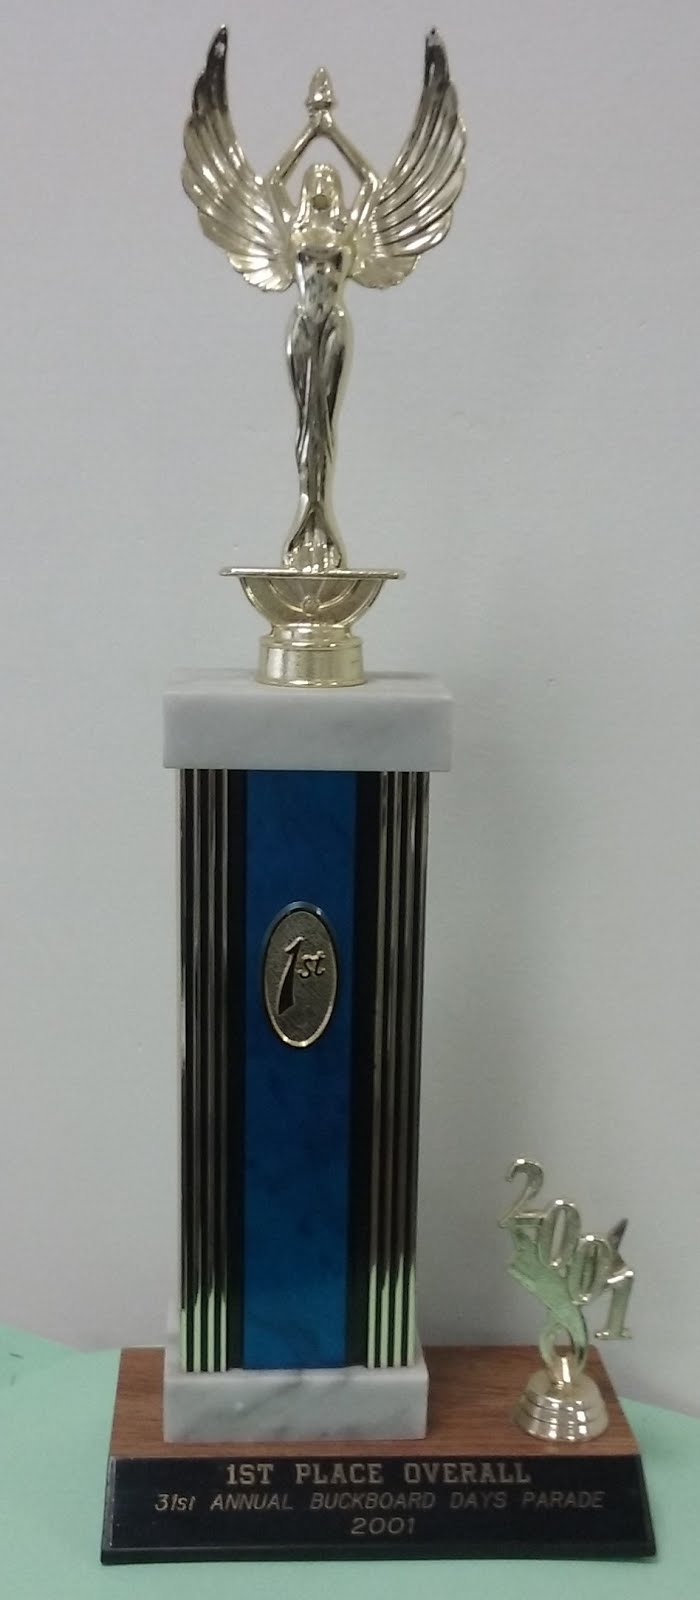 Our Buckboard Days 2001 Trophy